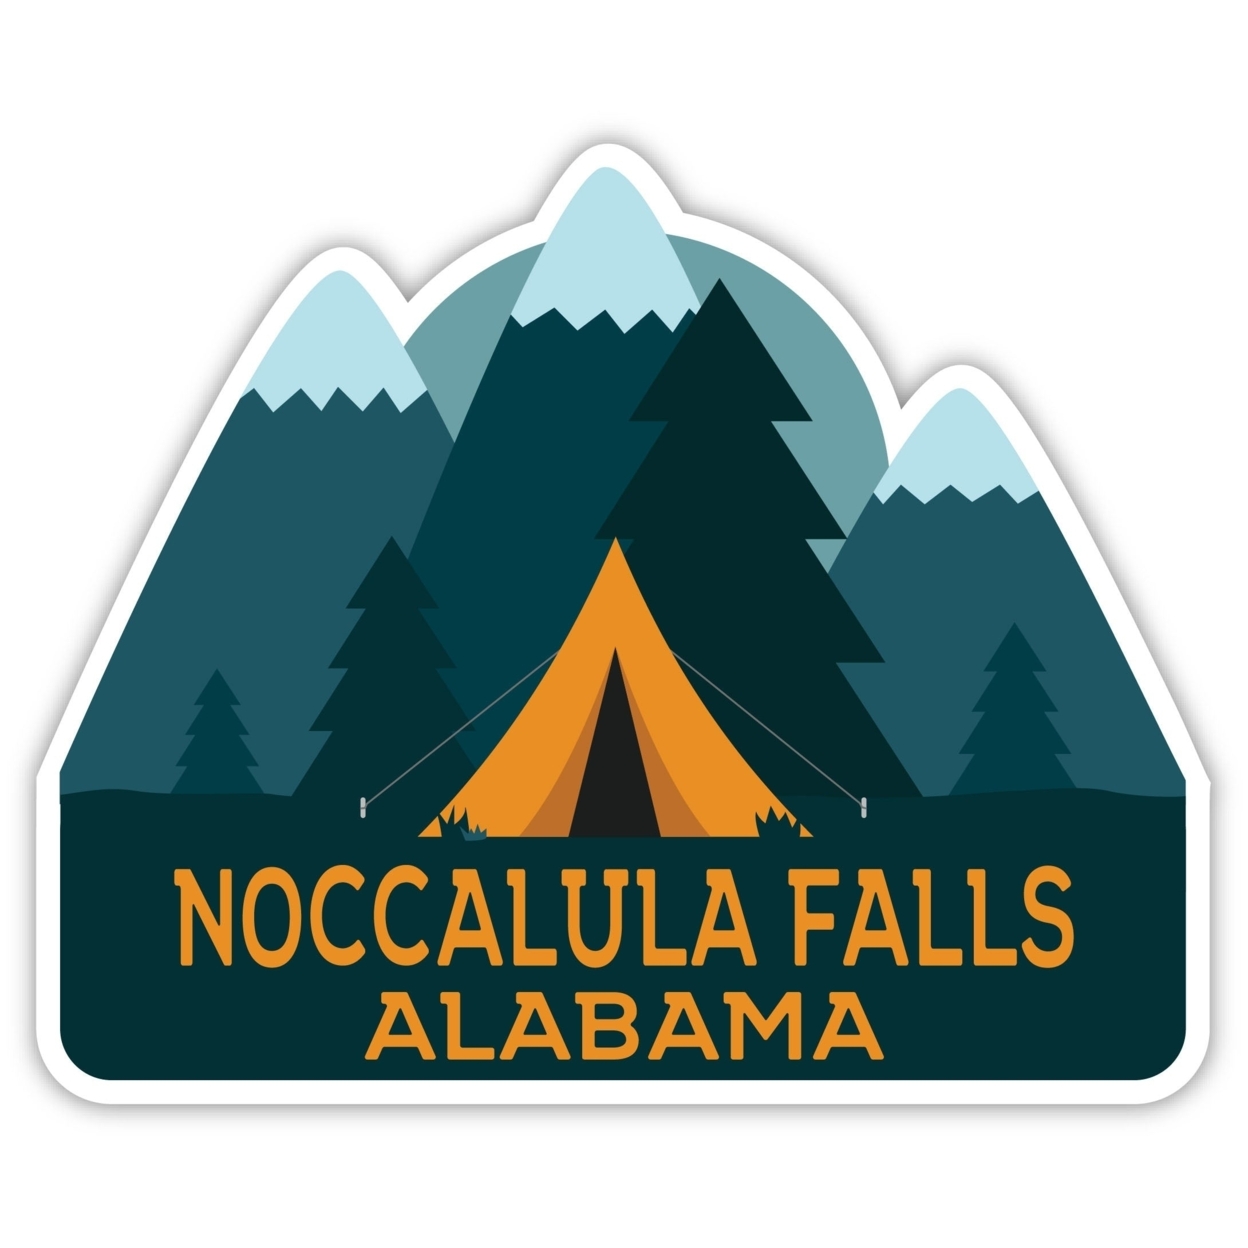 Noccalula Falls Alabama Souvenir Decorative Stickers (Choose Theme And Size) - Single Unit, 4-Inch, Tent